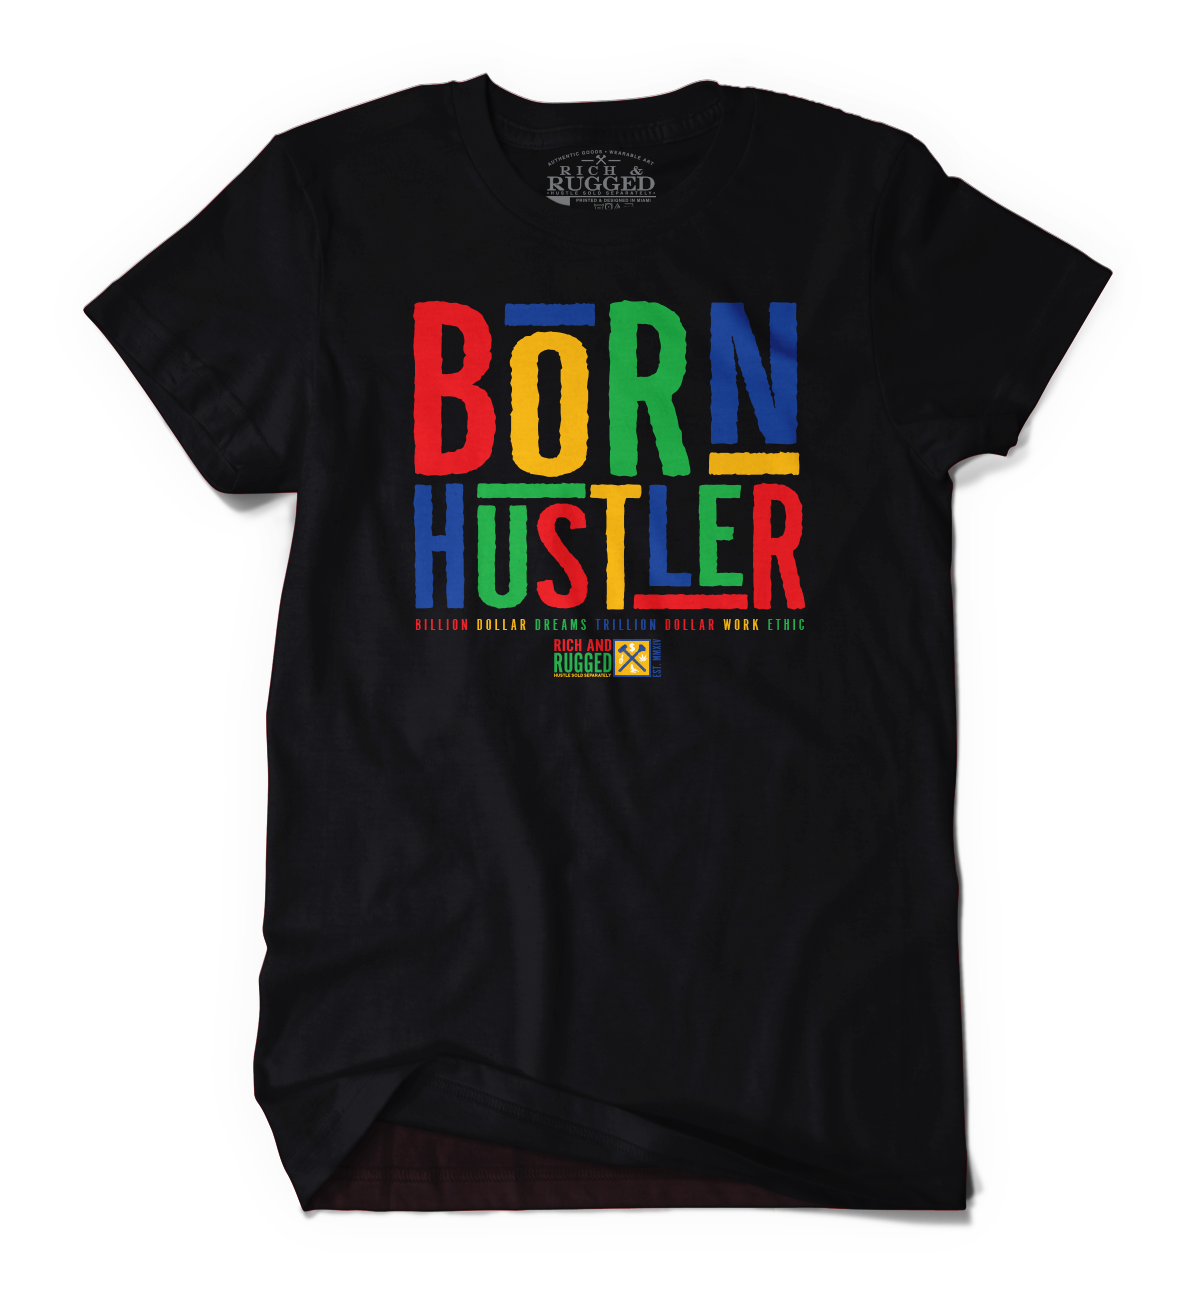 BORN HUSTLER - BLACK